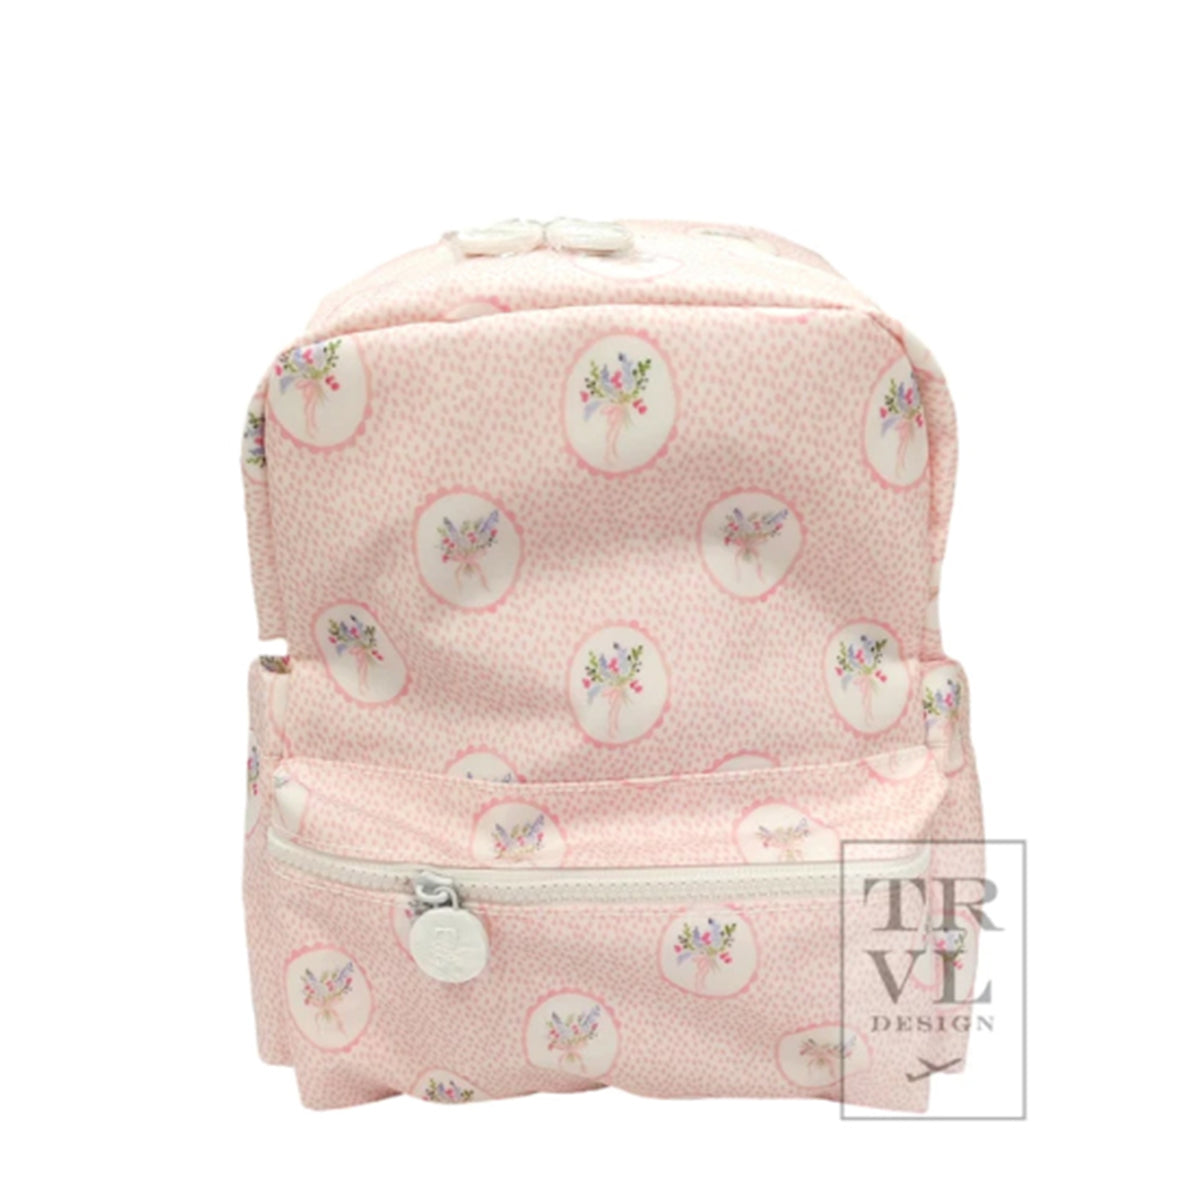 TRVL Design Toddler Backpack Pink Medallion Mini Backer 